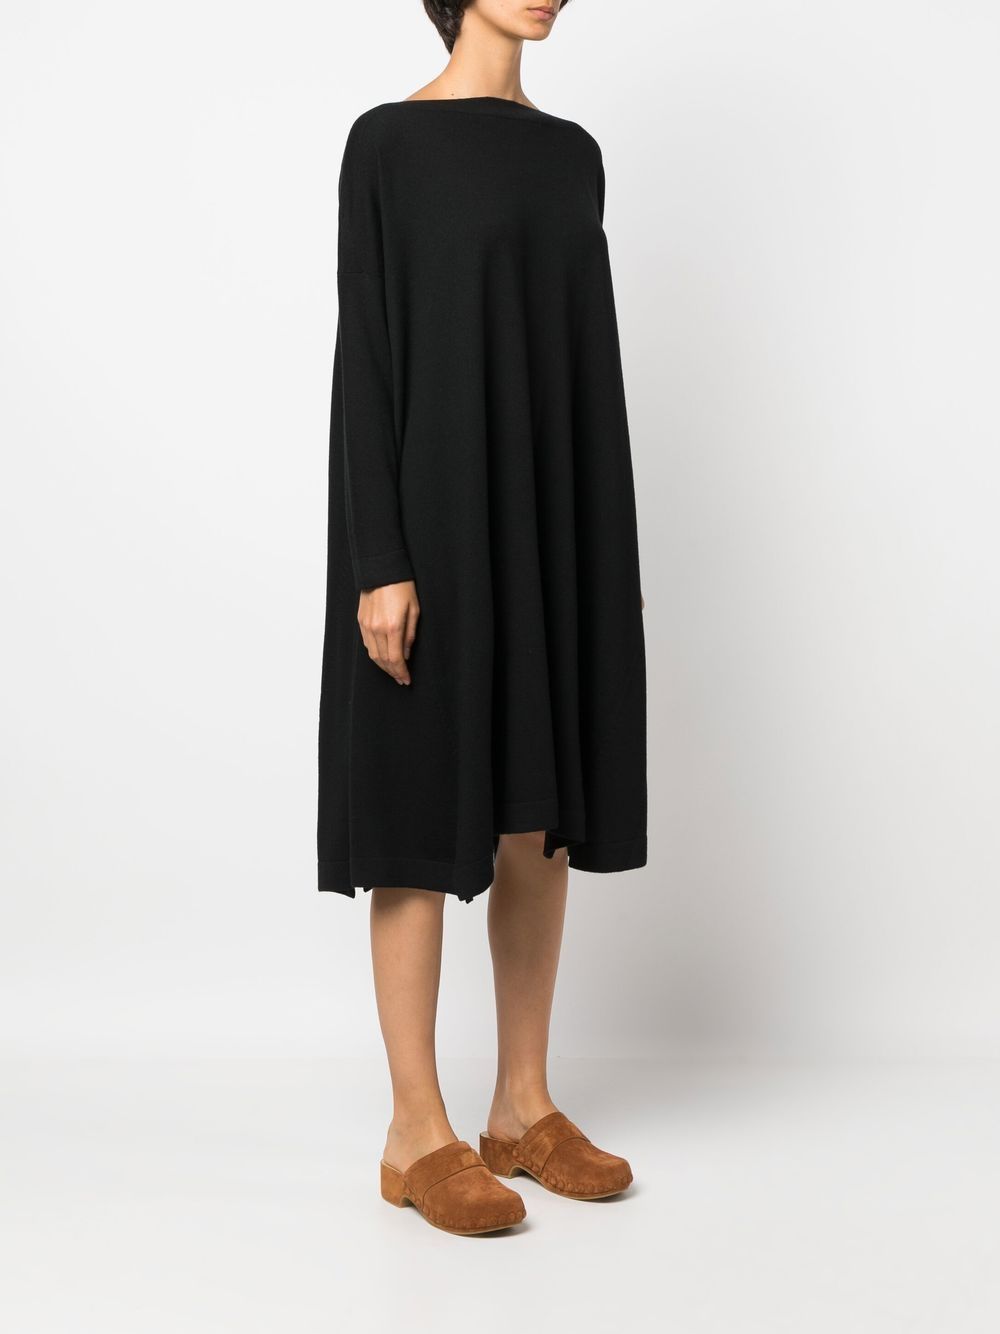 Shop Daniela Gregis Black Oversized Wool Short Dress For Women